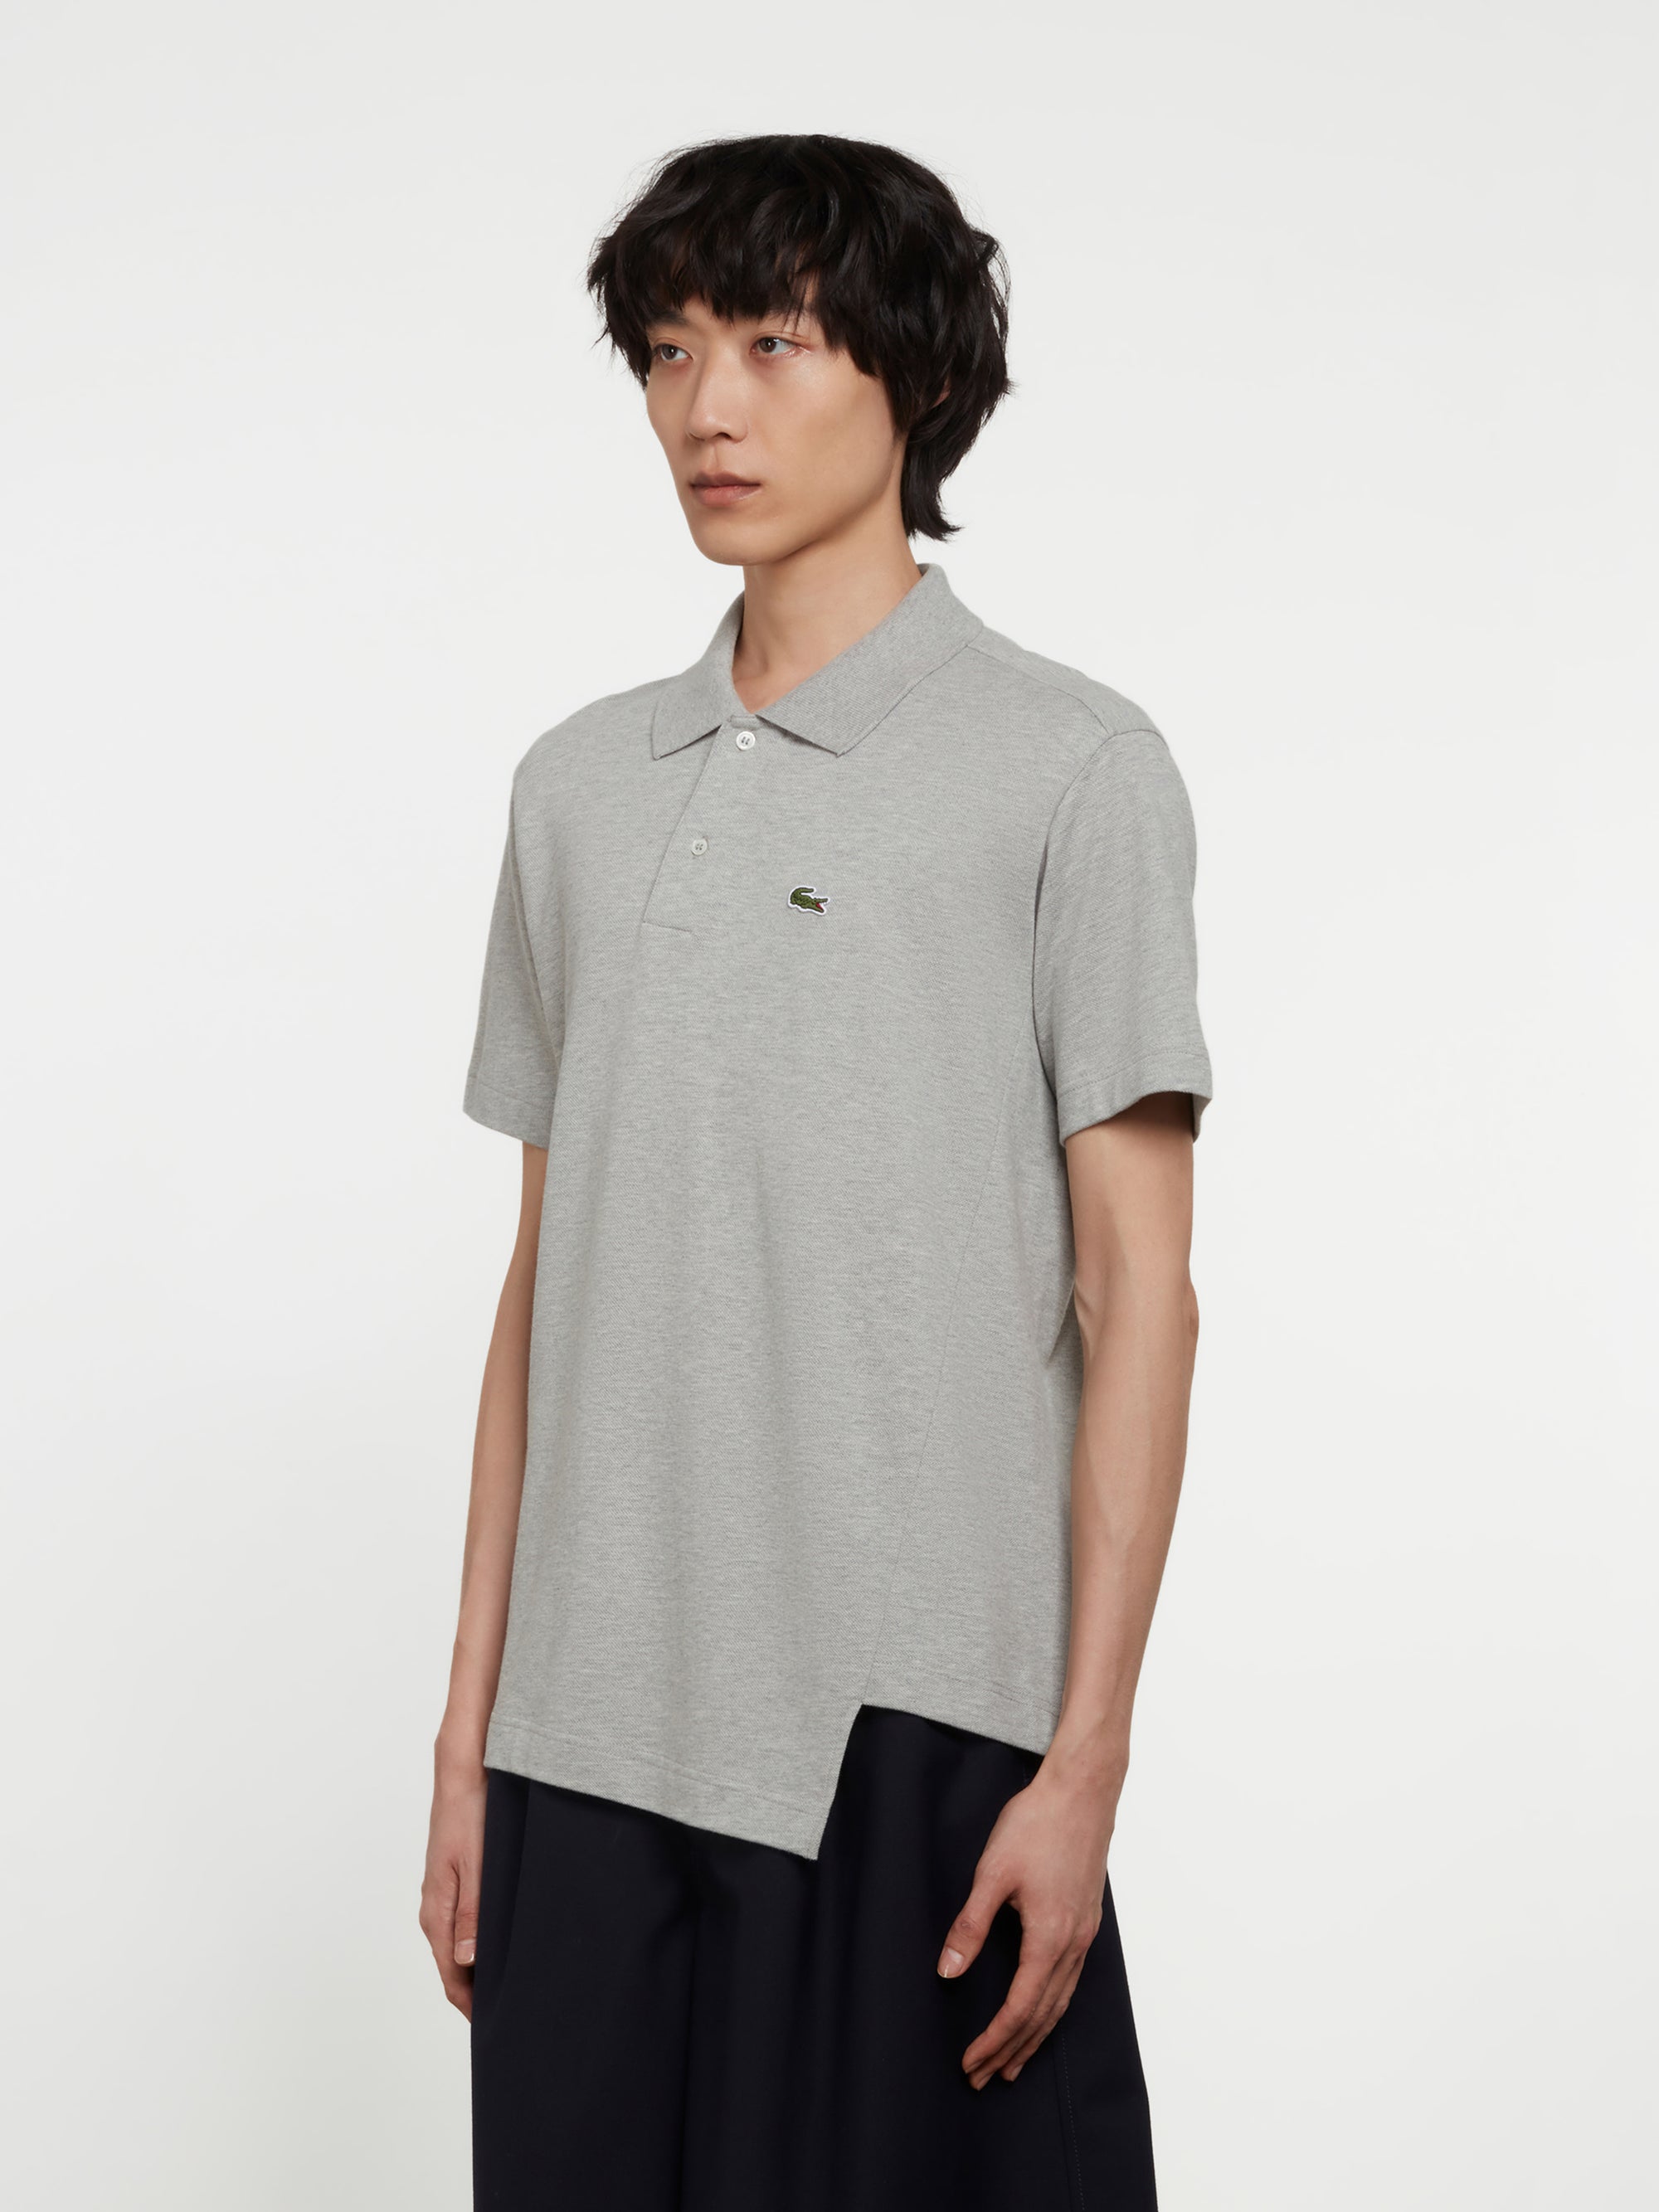 CDG Shirt - Lacoste Men's Asymmetric Polo Shirt - (Grey) view 2